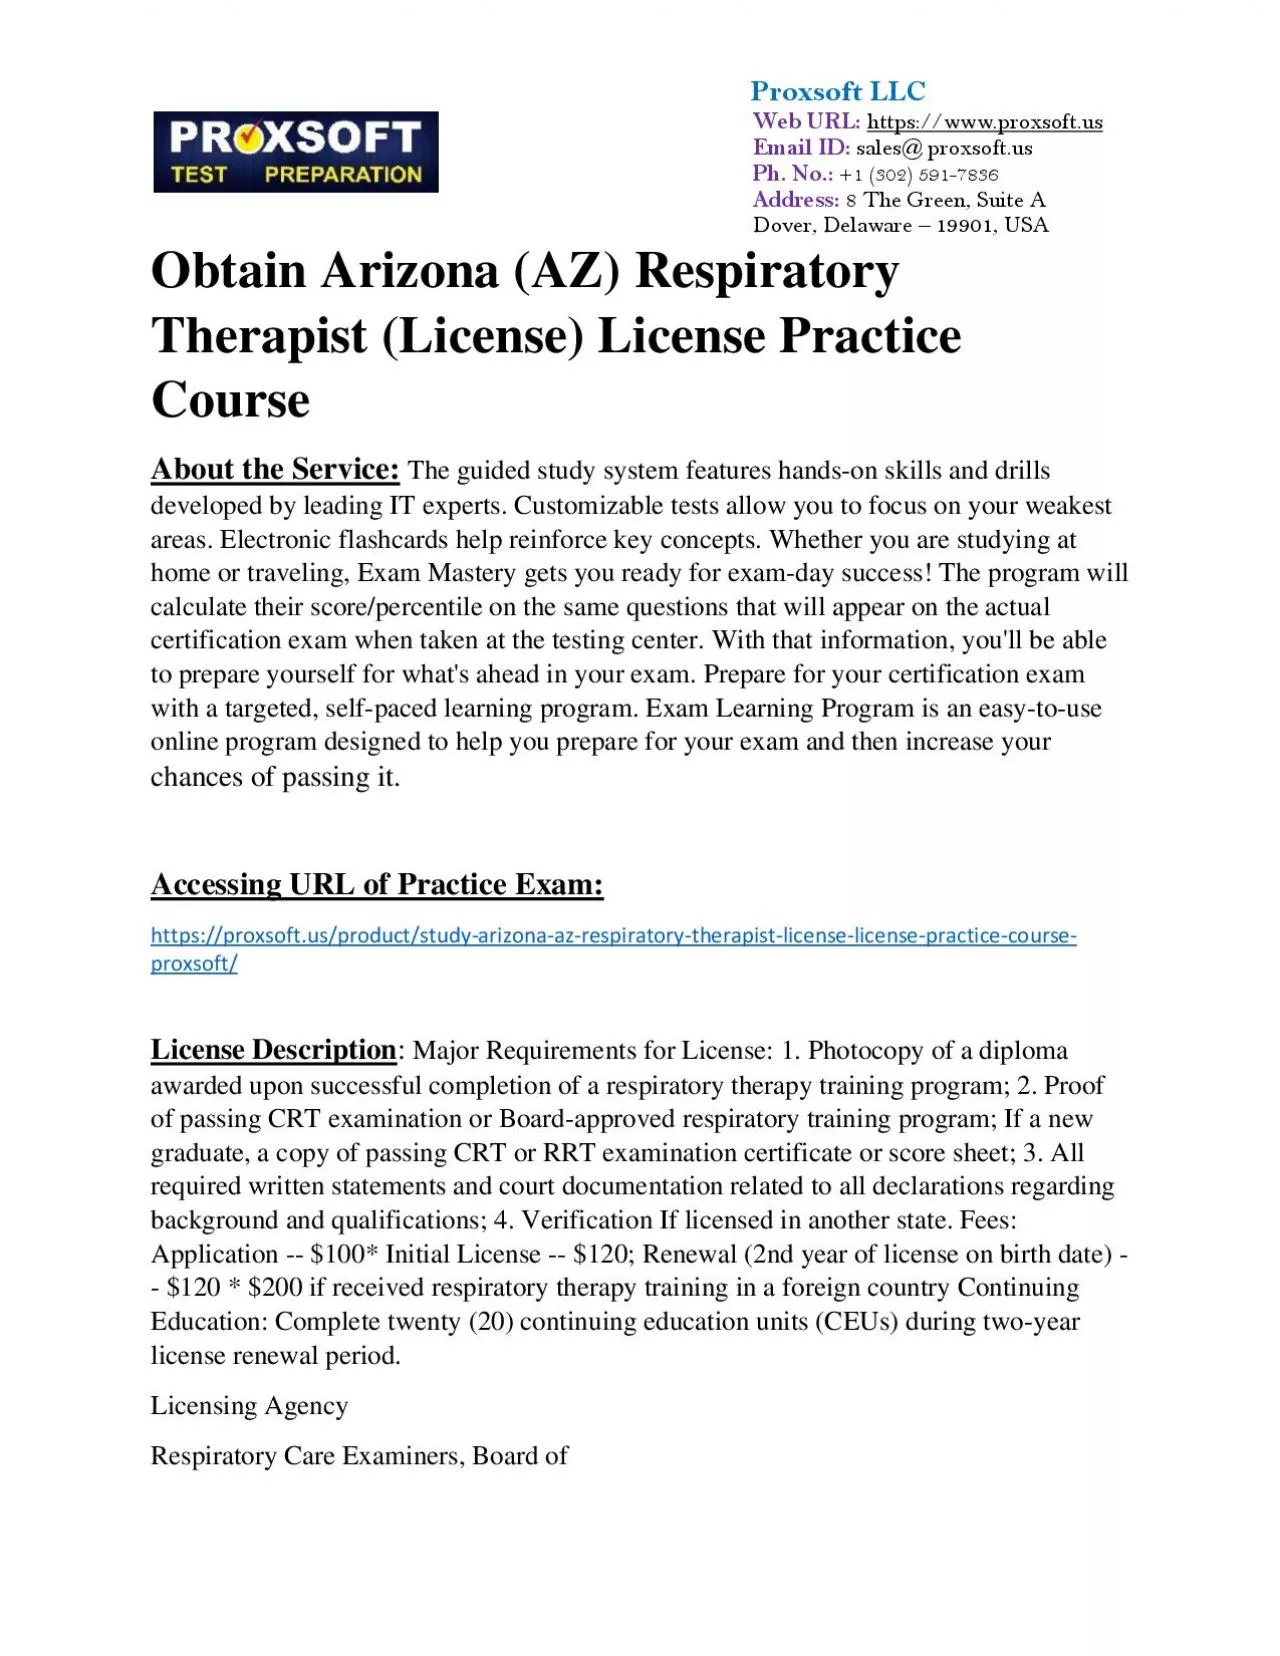 Obtain Arizona (AZ) Respiratory Therapist (License) License Practice Course